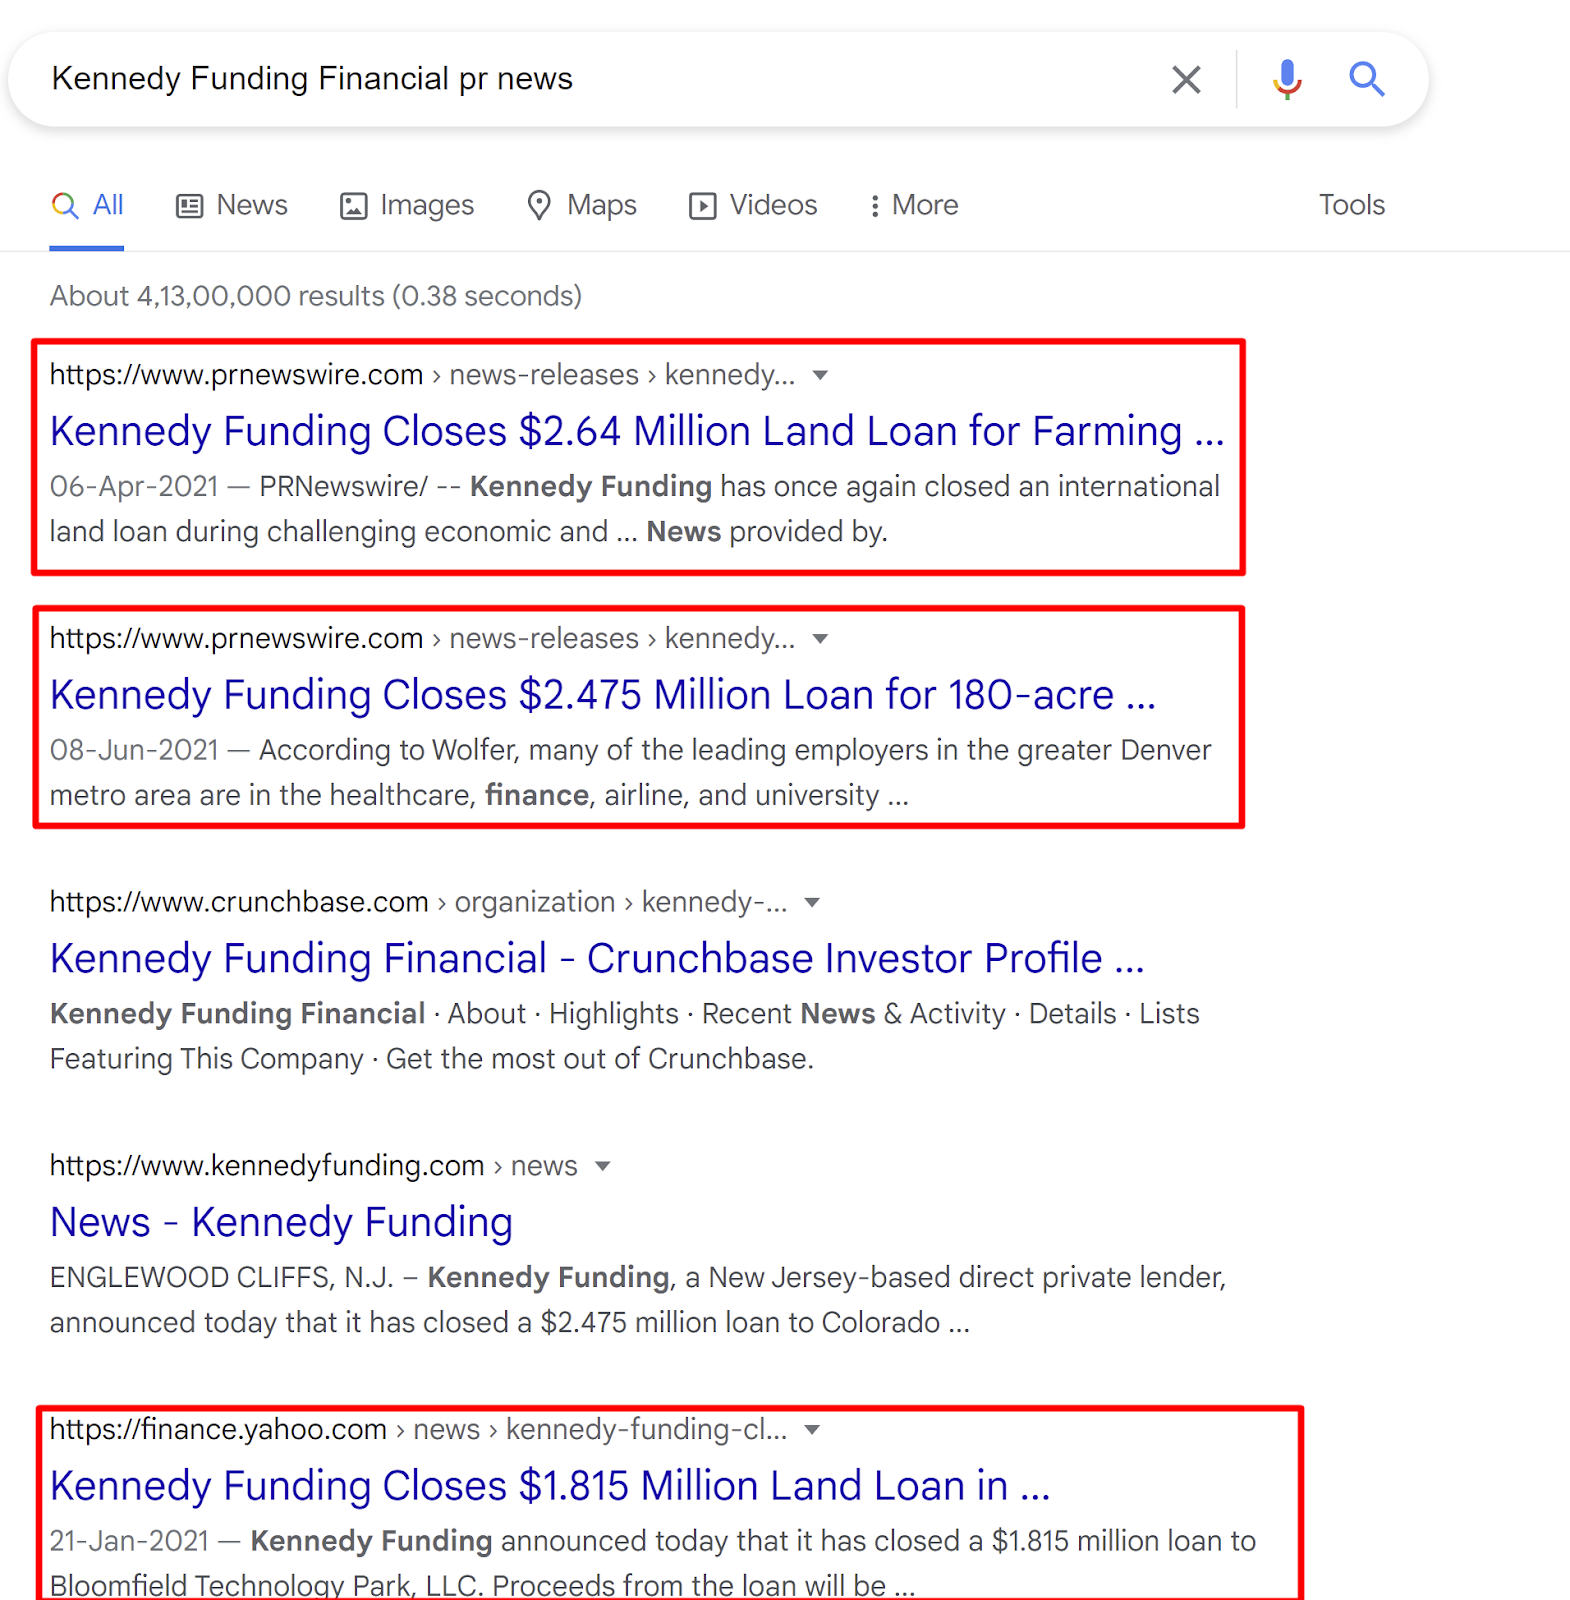 Kennedy Funding Financial news